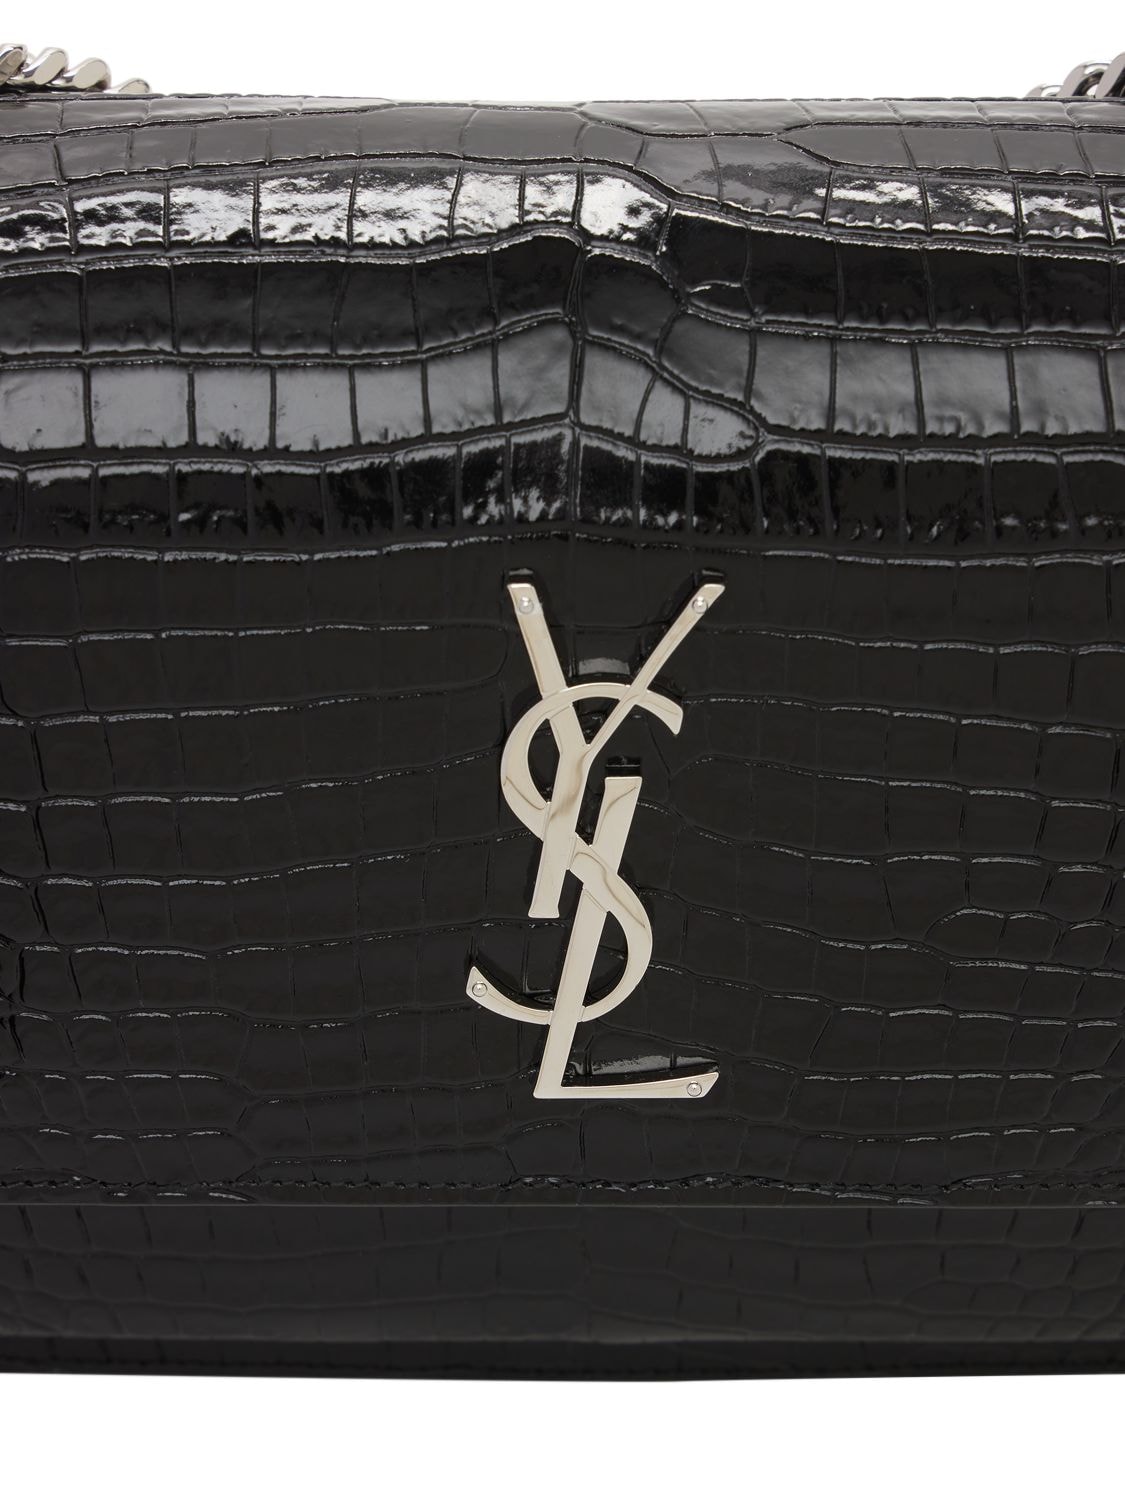 Saint Laurent Women's Medium Sunset Croc-Embossed Leather Shoulder Bag